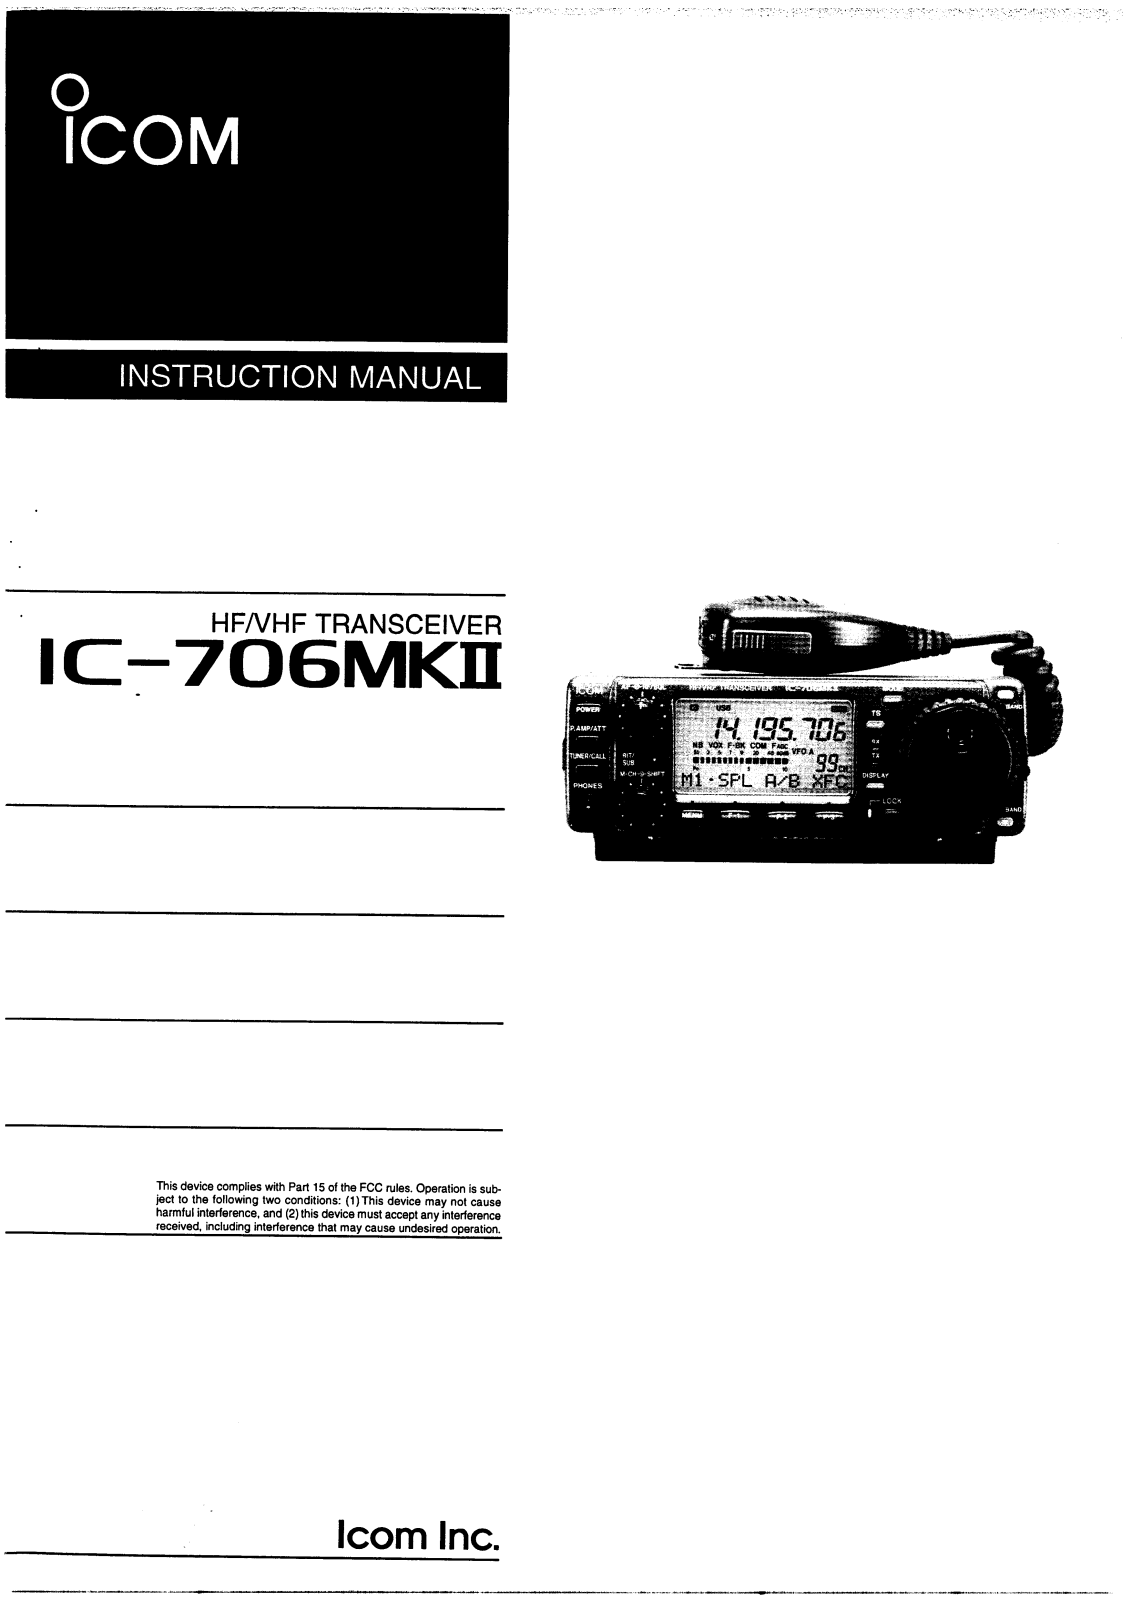 Icom IC-706MKII User Manual